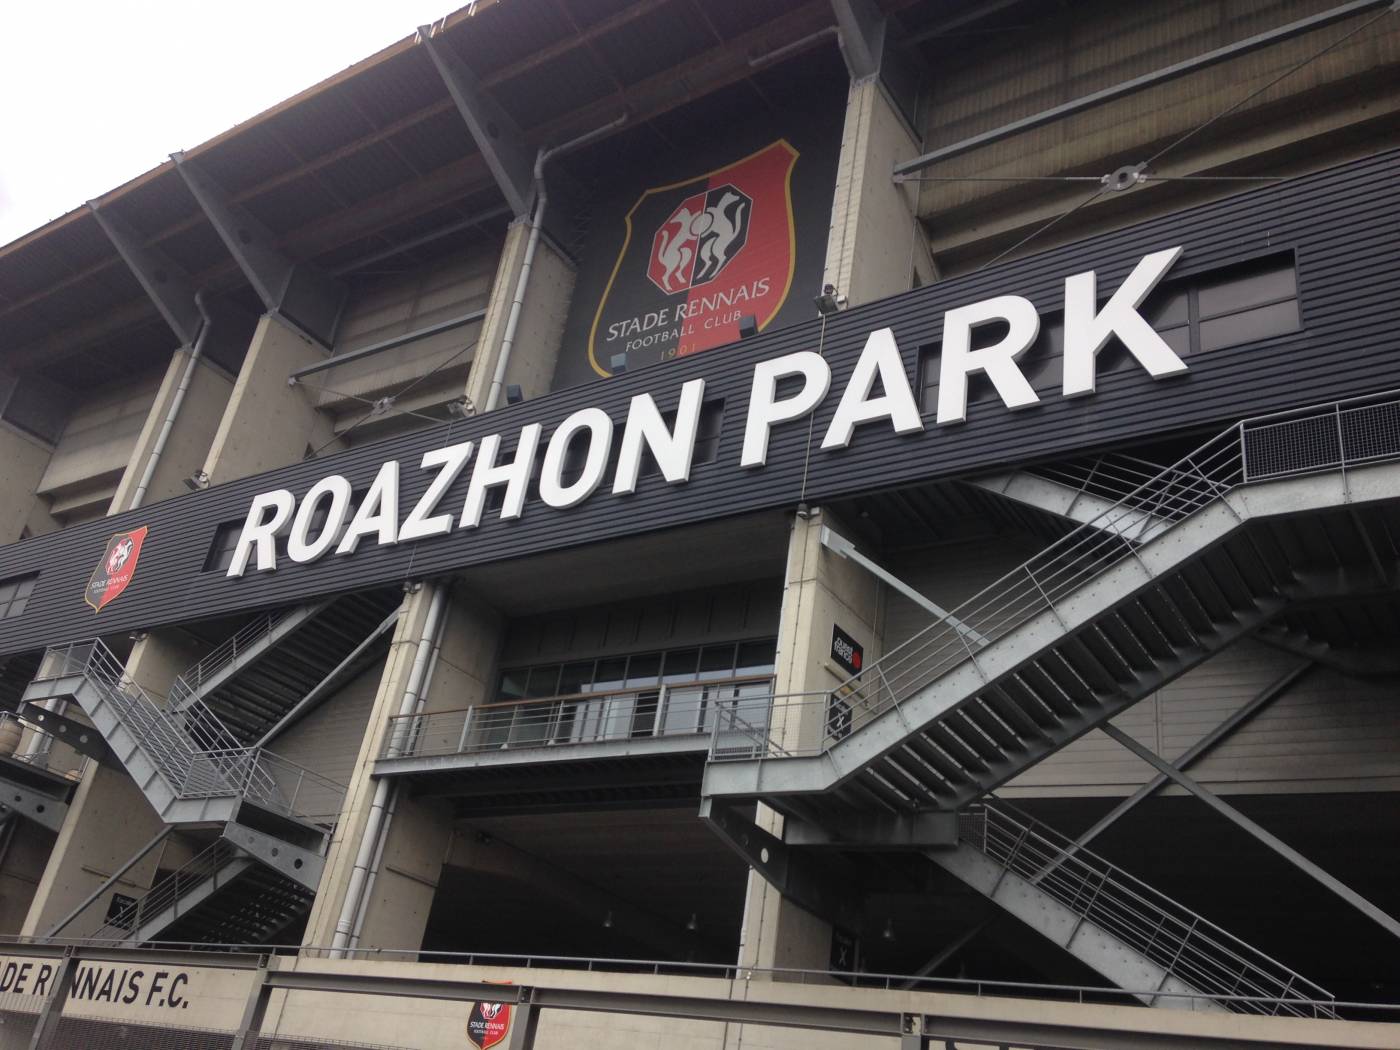 Roazhon Park - Stade Rennes